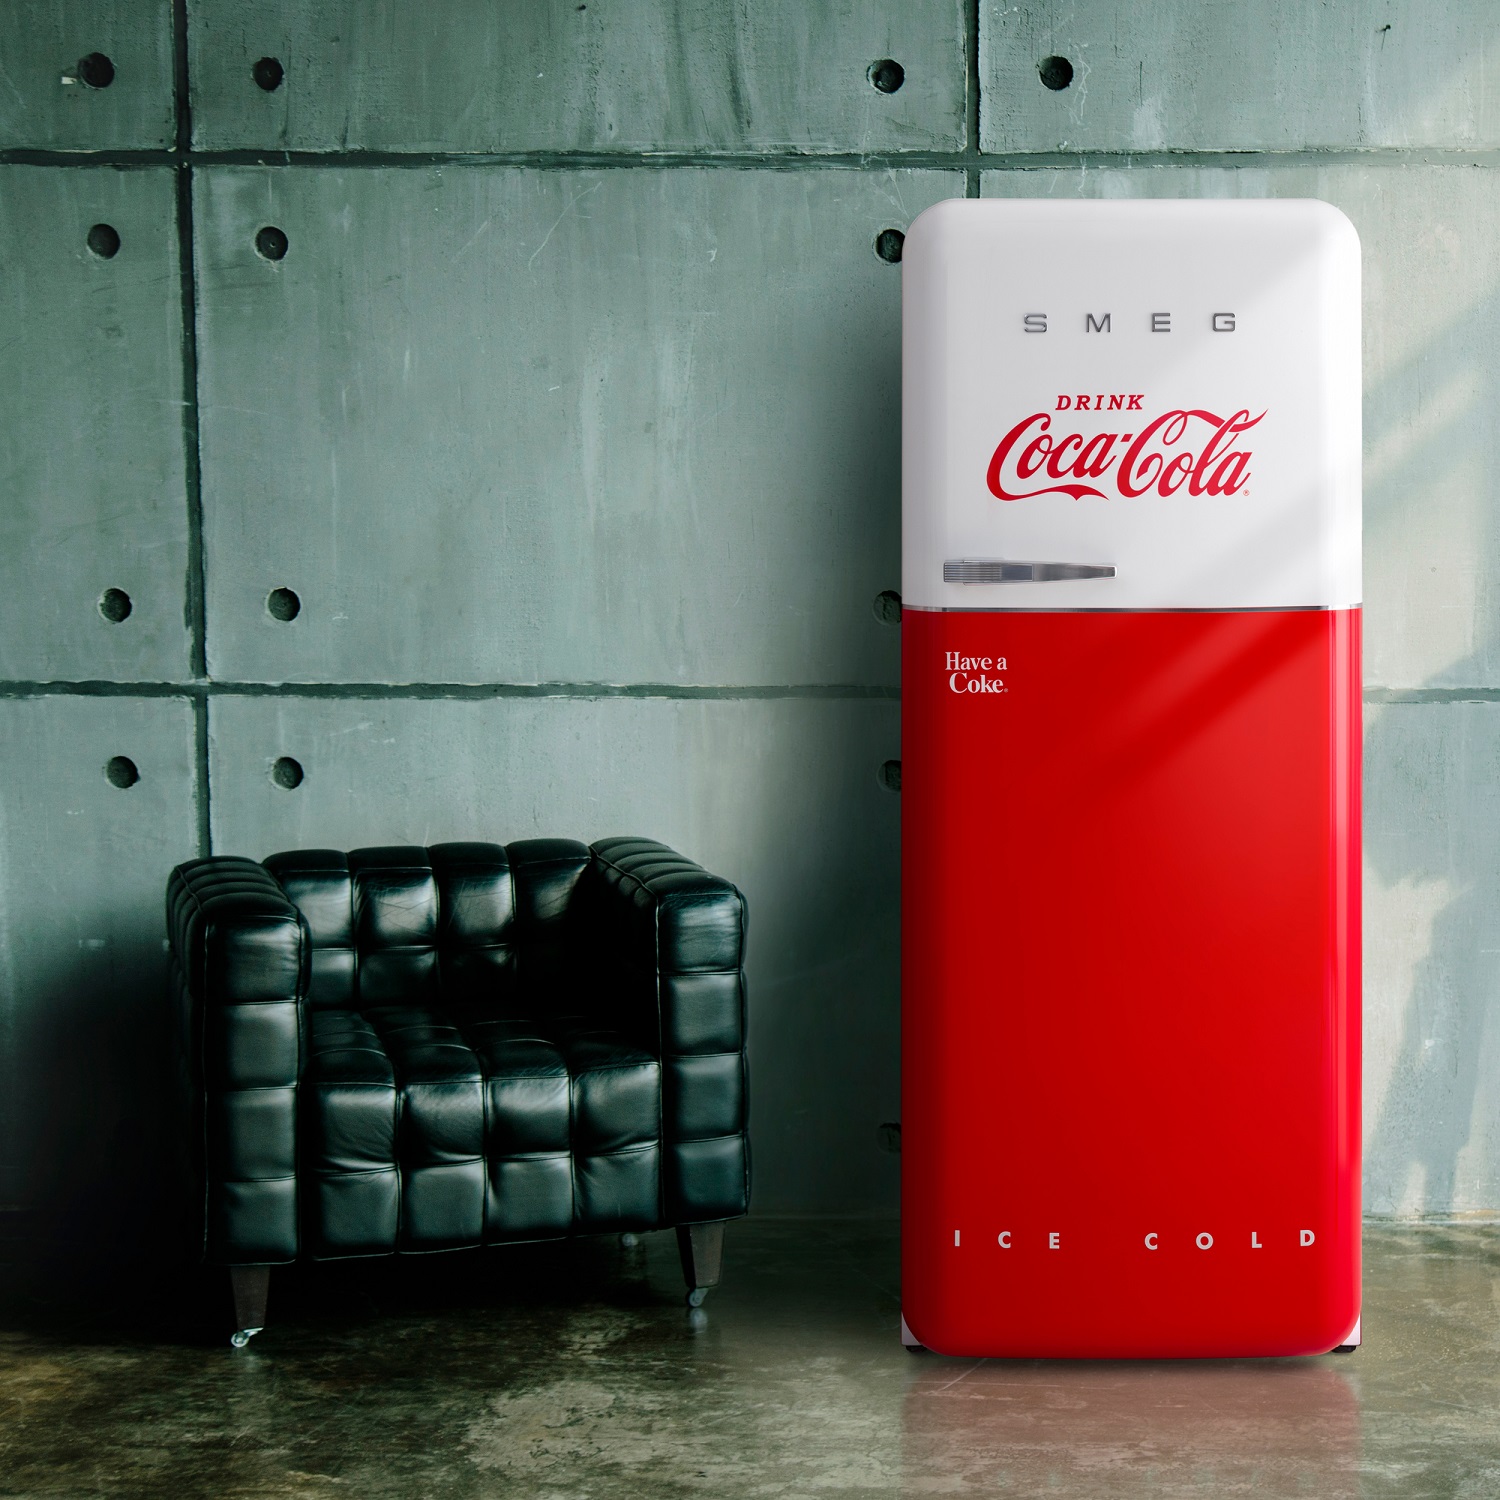 Limited edition Smeg 'Iconic' Coca Cola fridge - Appliance Retailer